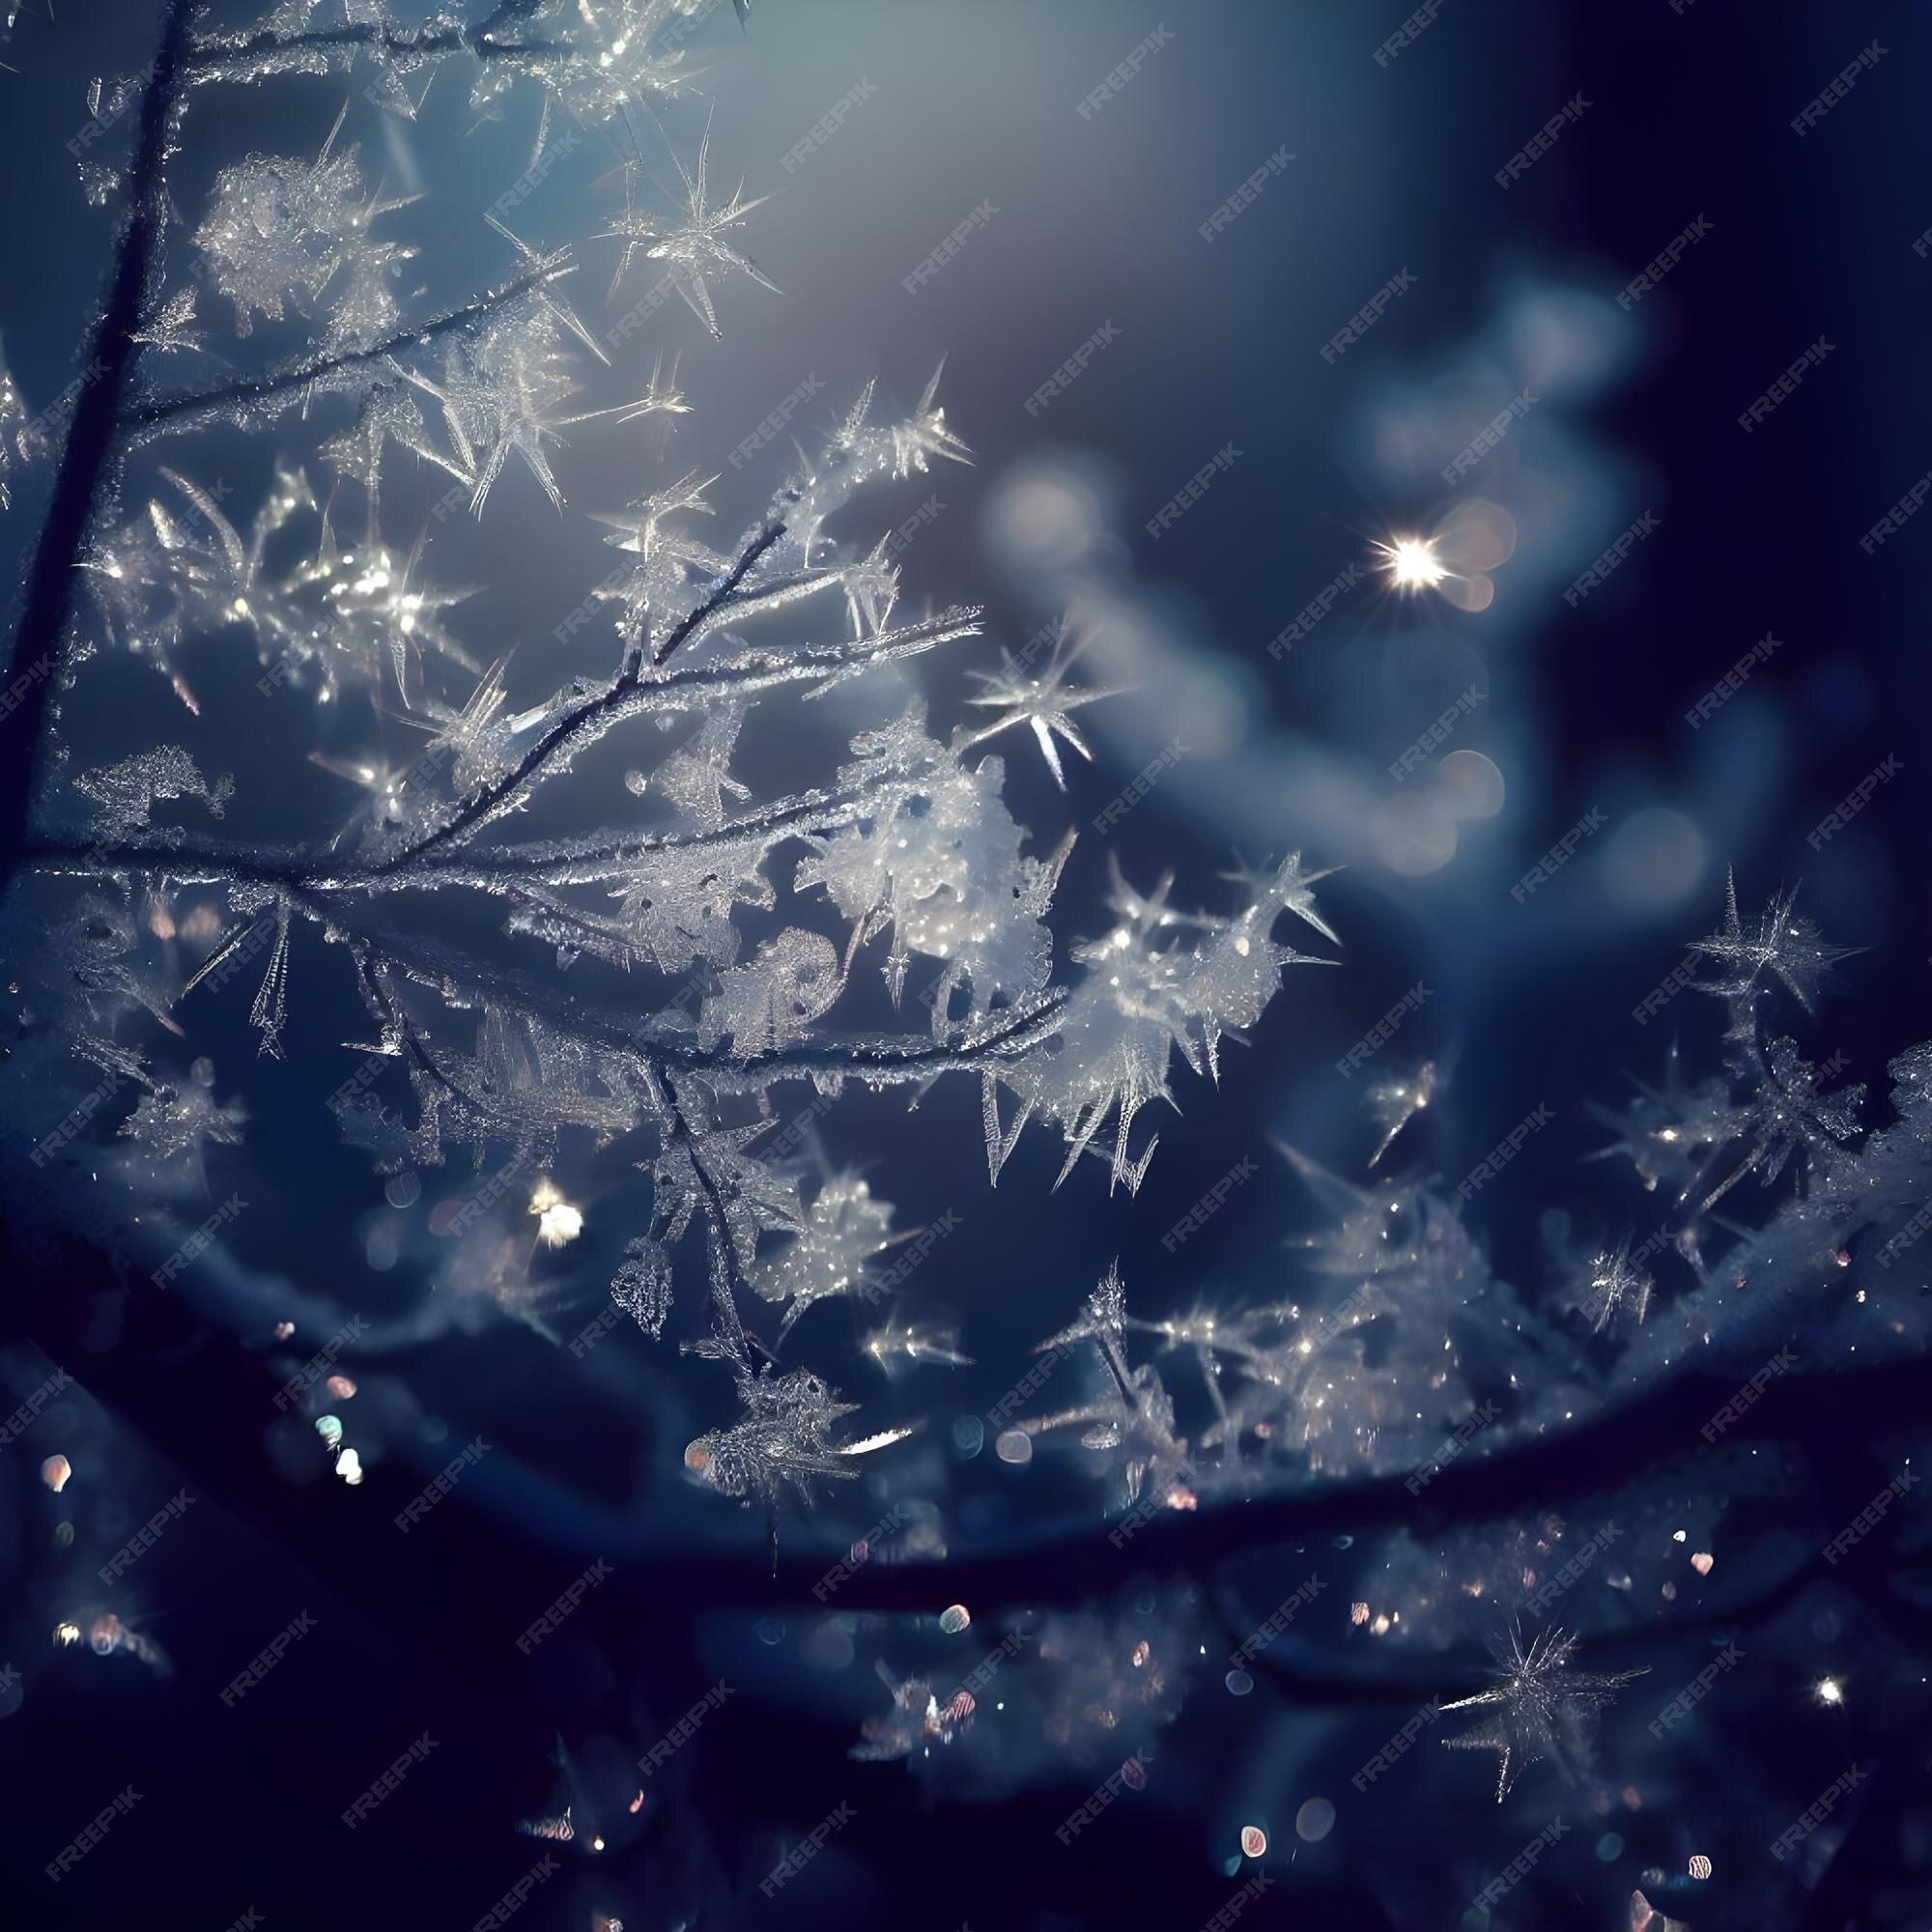 Snowflake Desktop Wallpaper Image